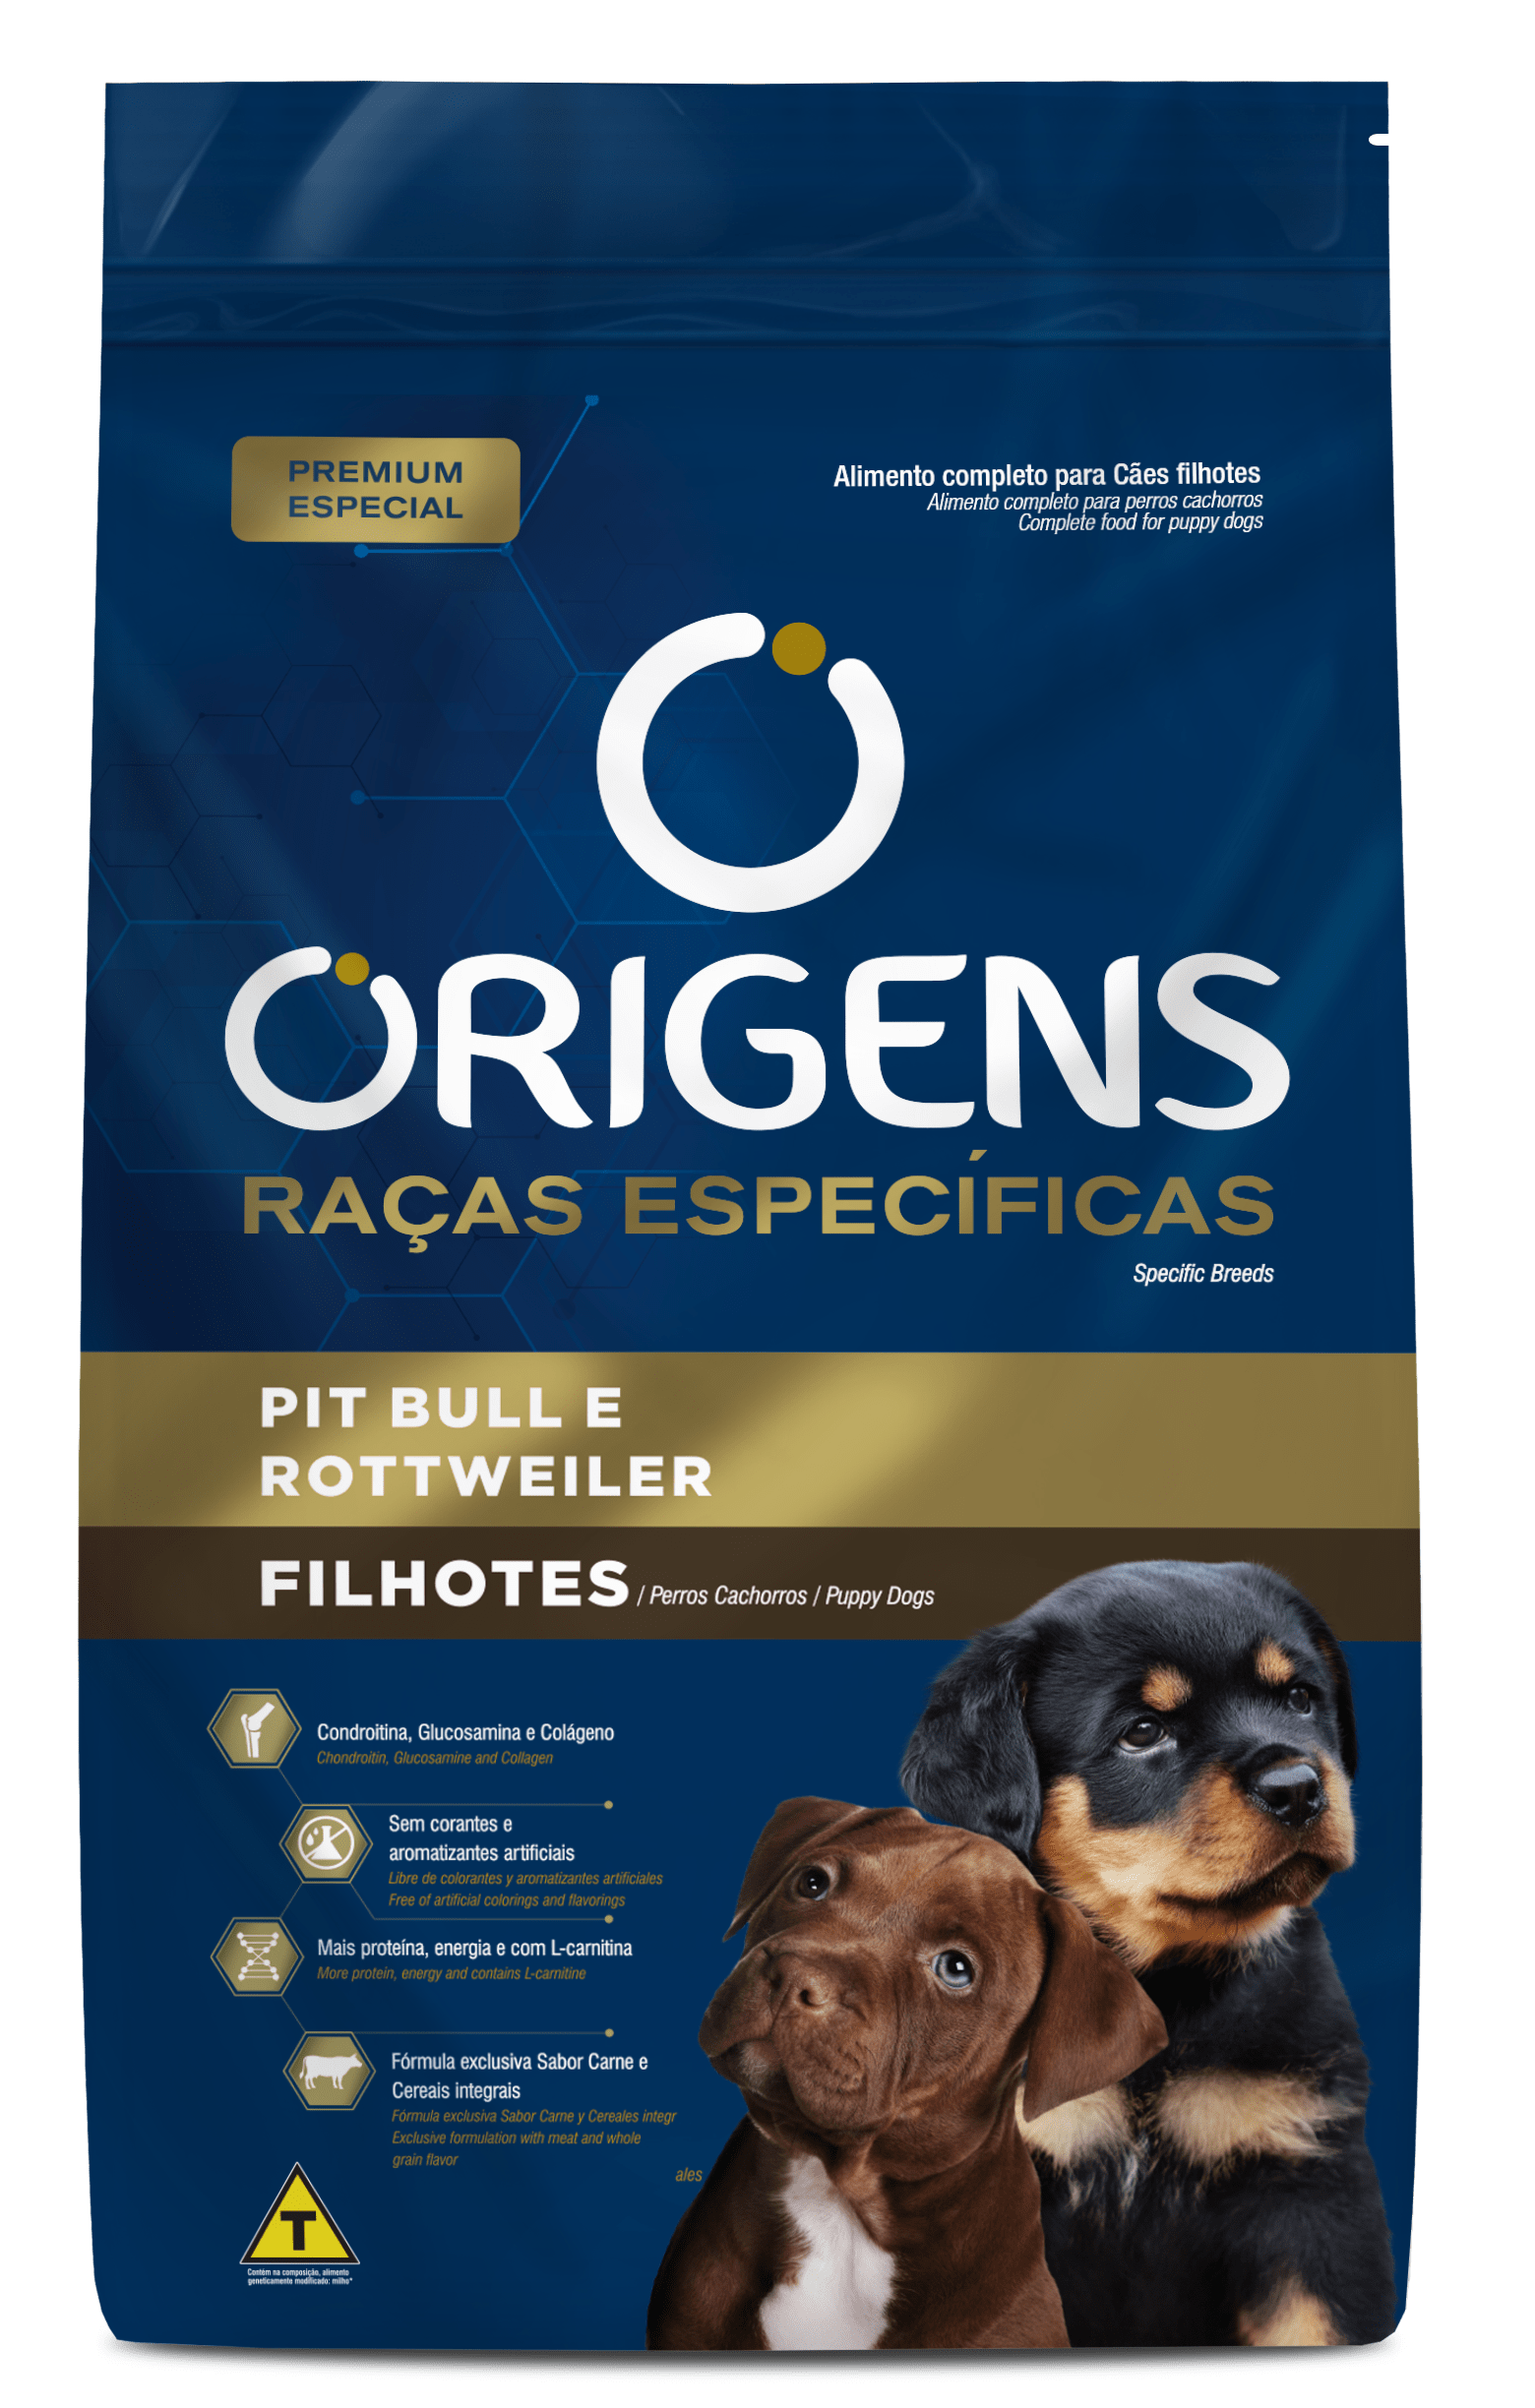 Origens Premium Especial Specific Breeds Puppies Pit Bull and Rottweiler